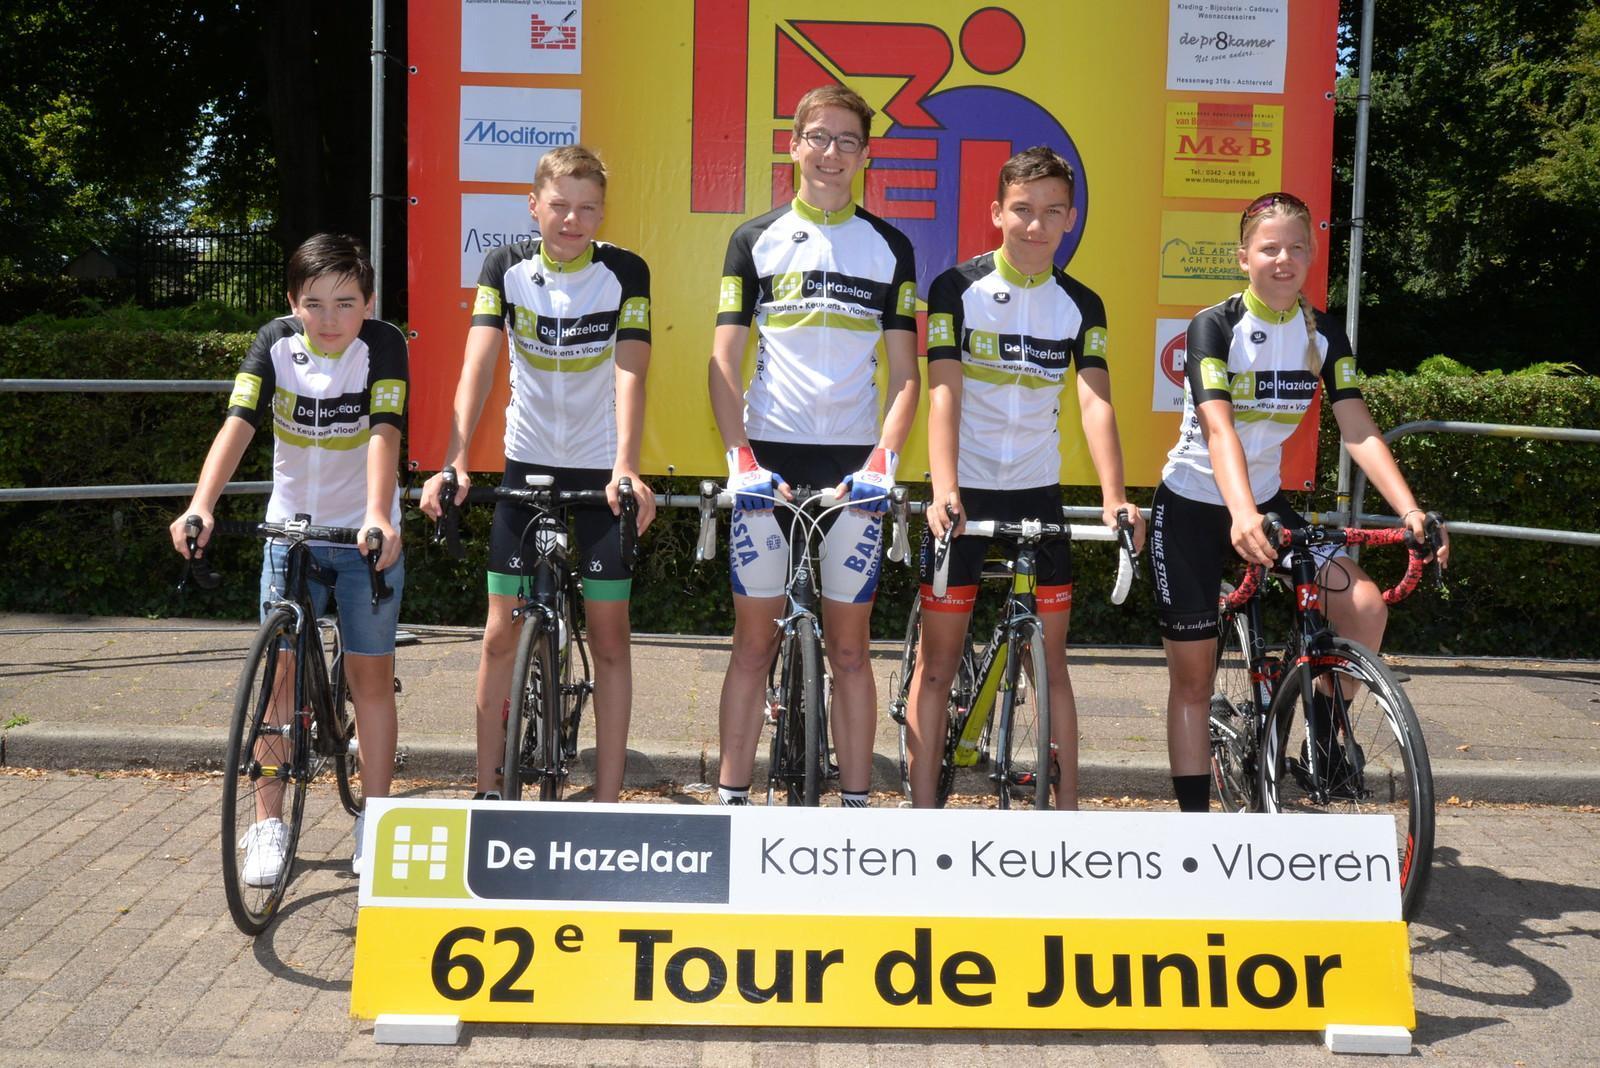 Sponsoring Tour de Junior